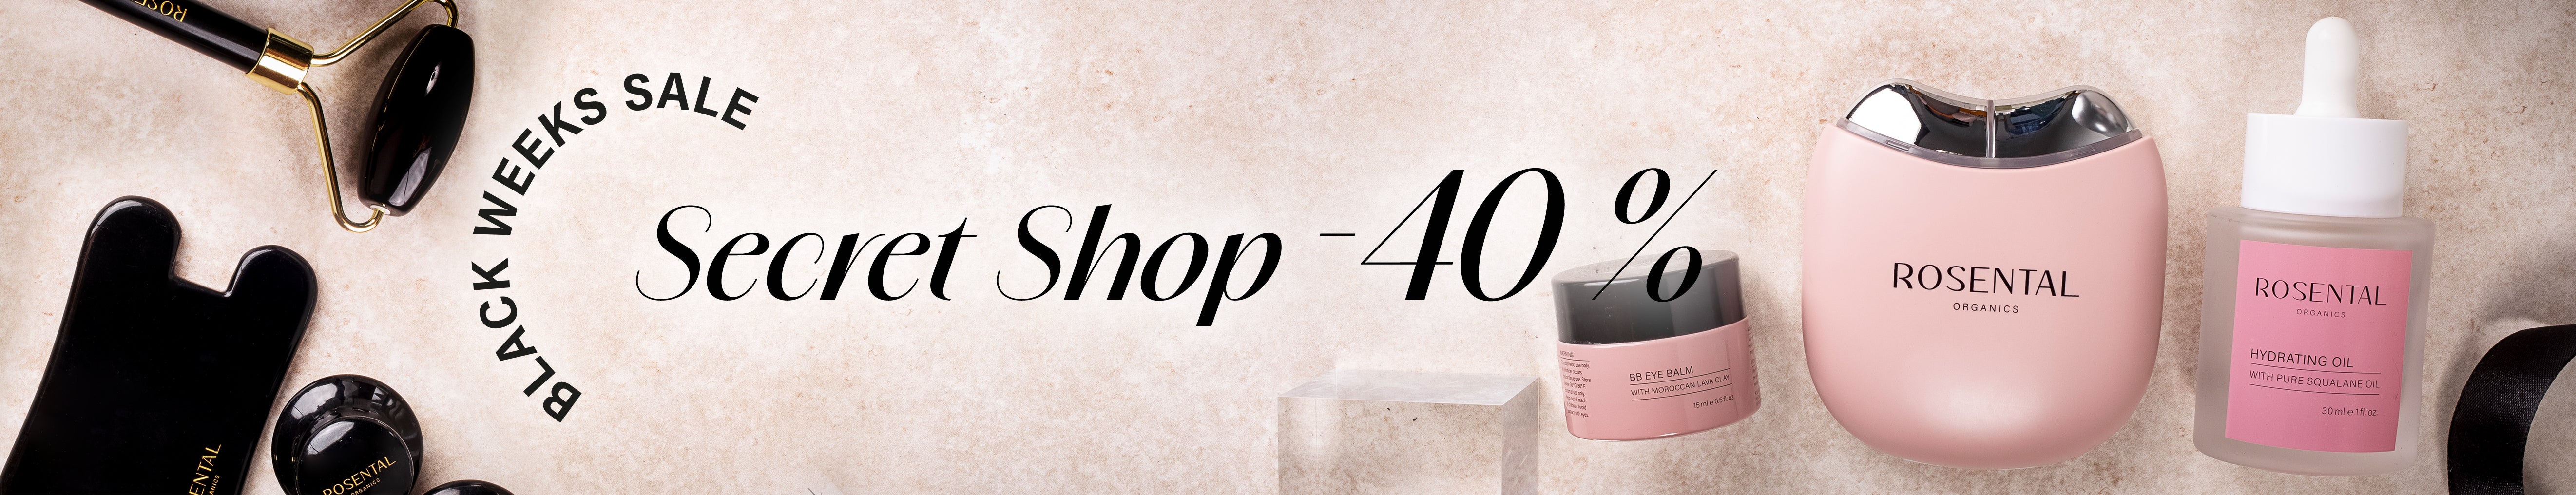 Secret Shop All Products 40